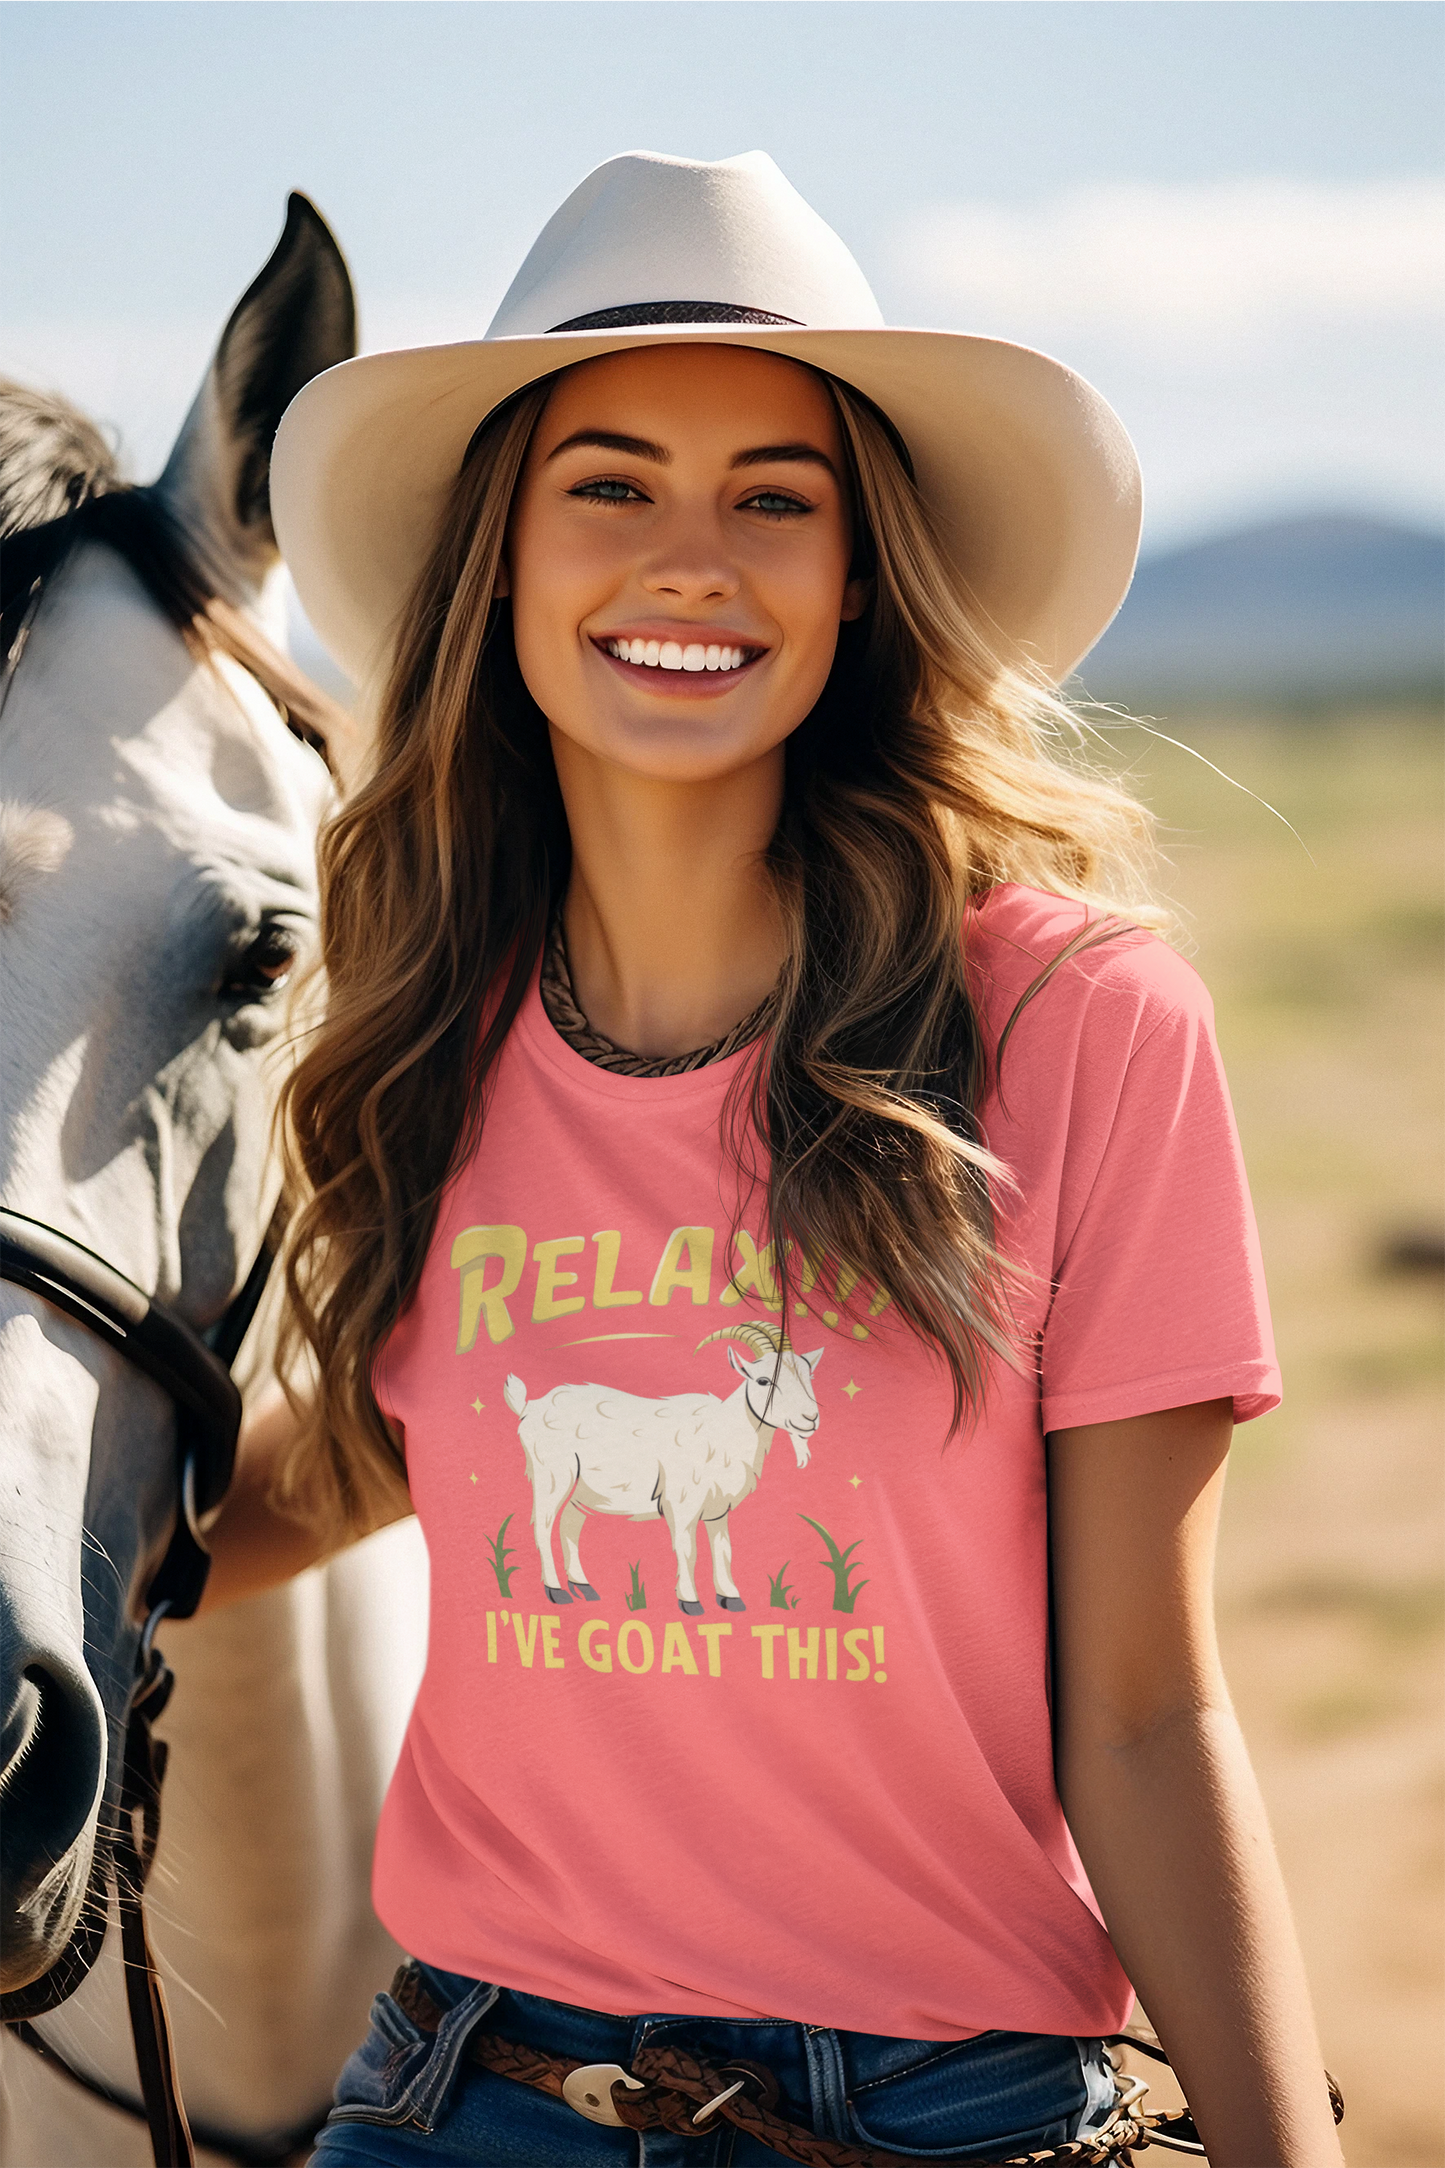 🐐 "I've Goat This!" Humorous T-Shirt